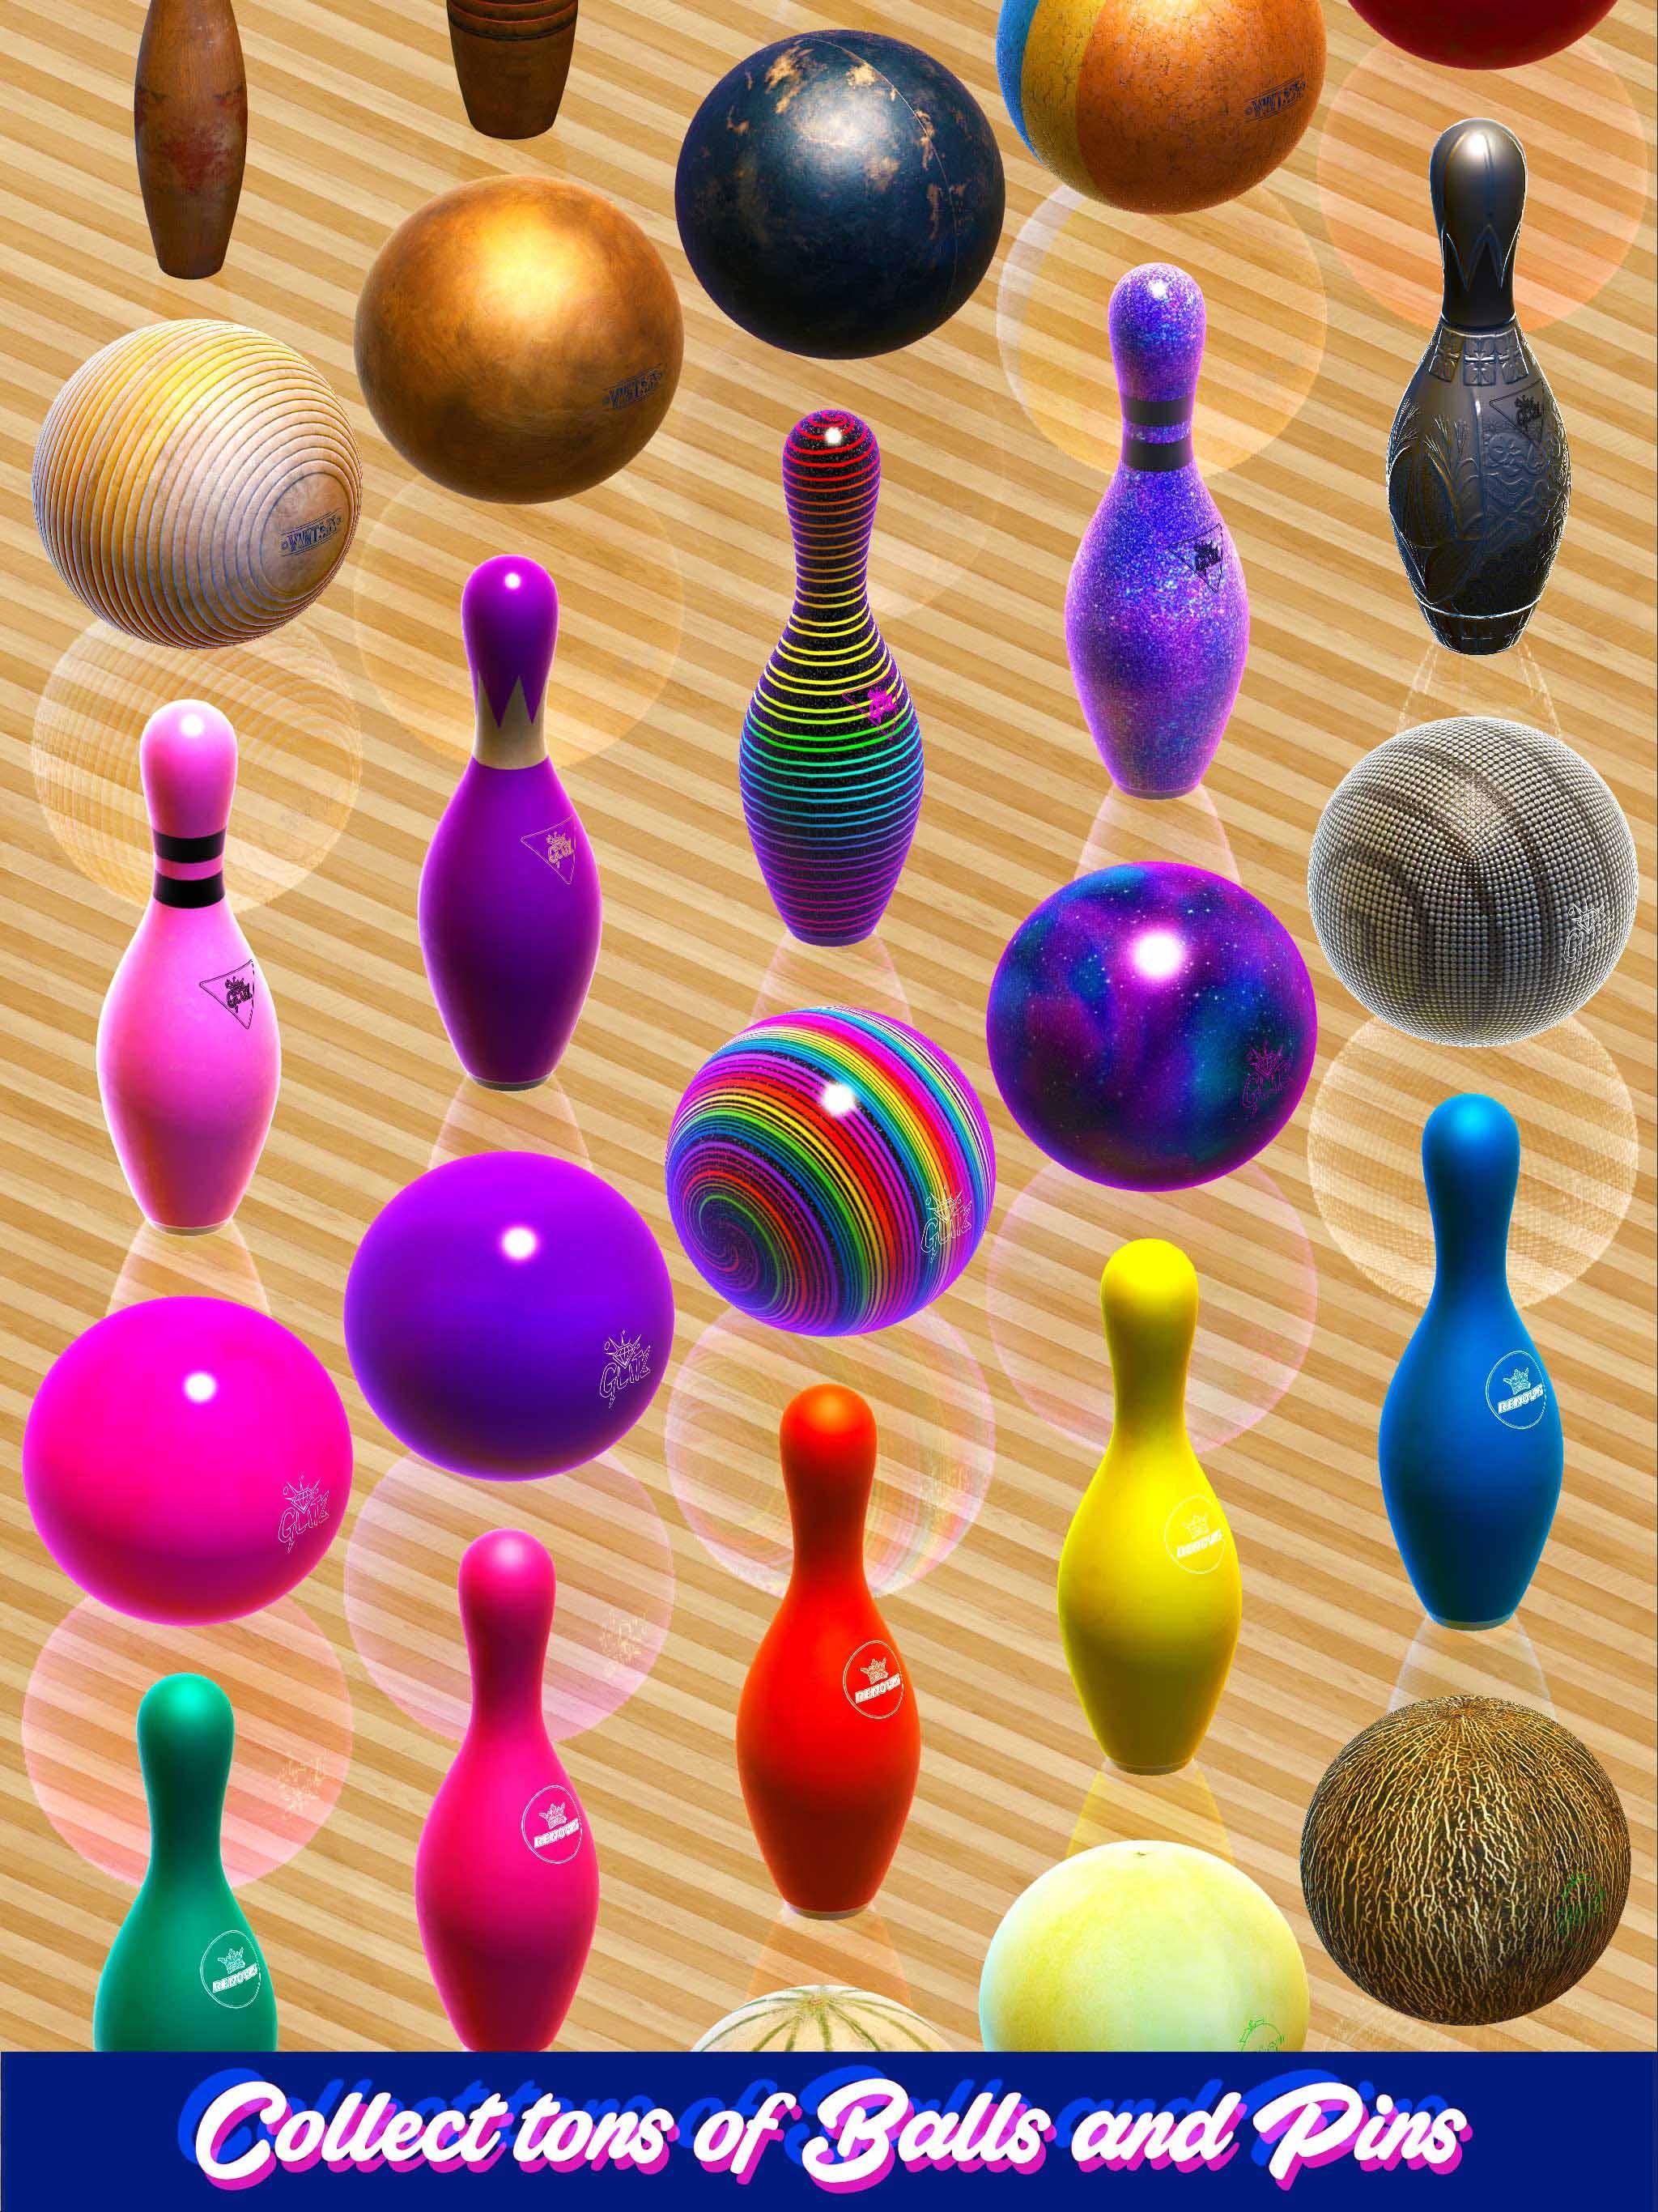 Bowling Go! - Best Realistic 10 Pin Bowling Games 0.3.0.1512 Screenshot 12